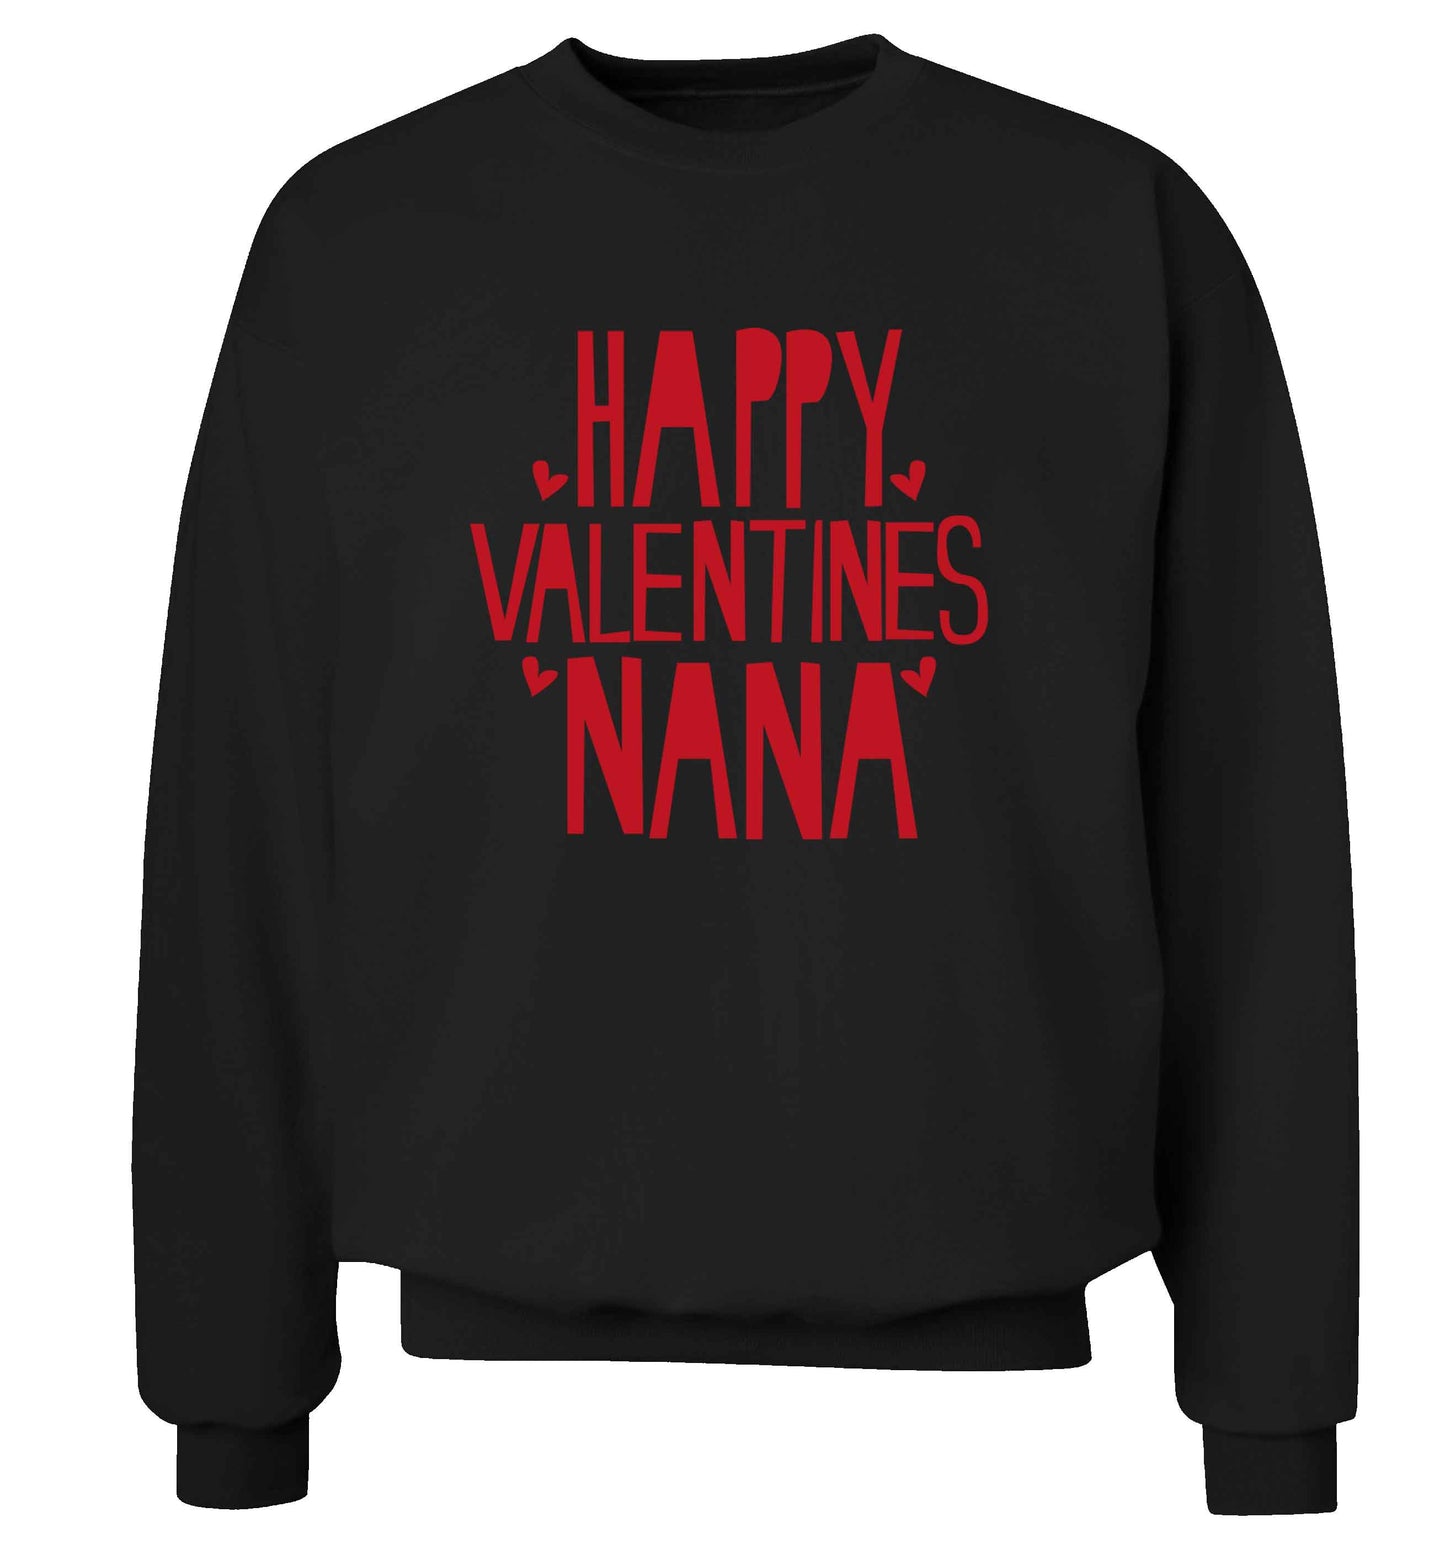 Happy valentines nana adult's unisex black sweater 2XL